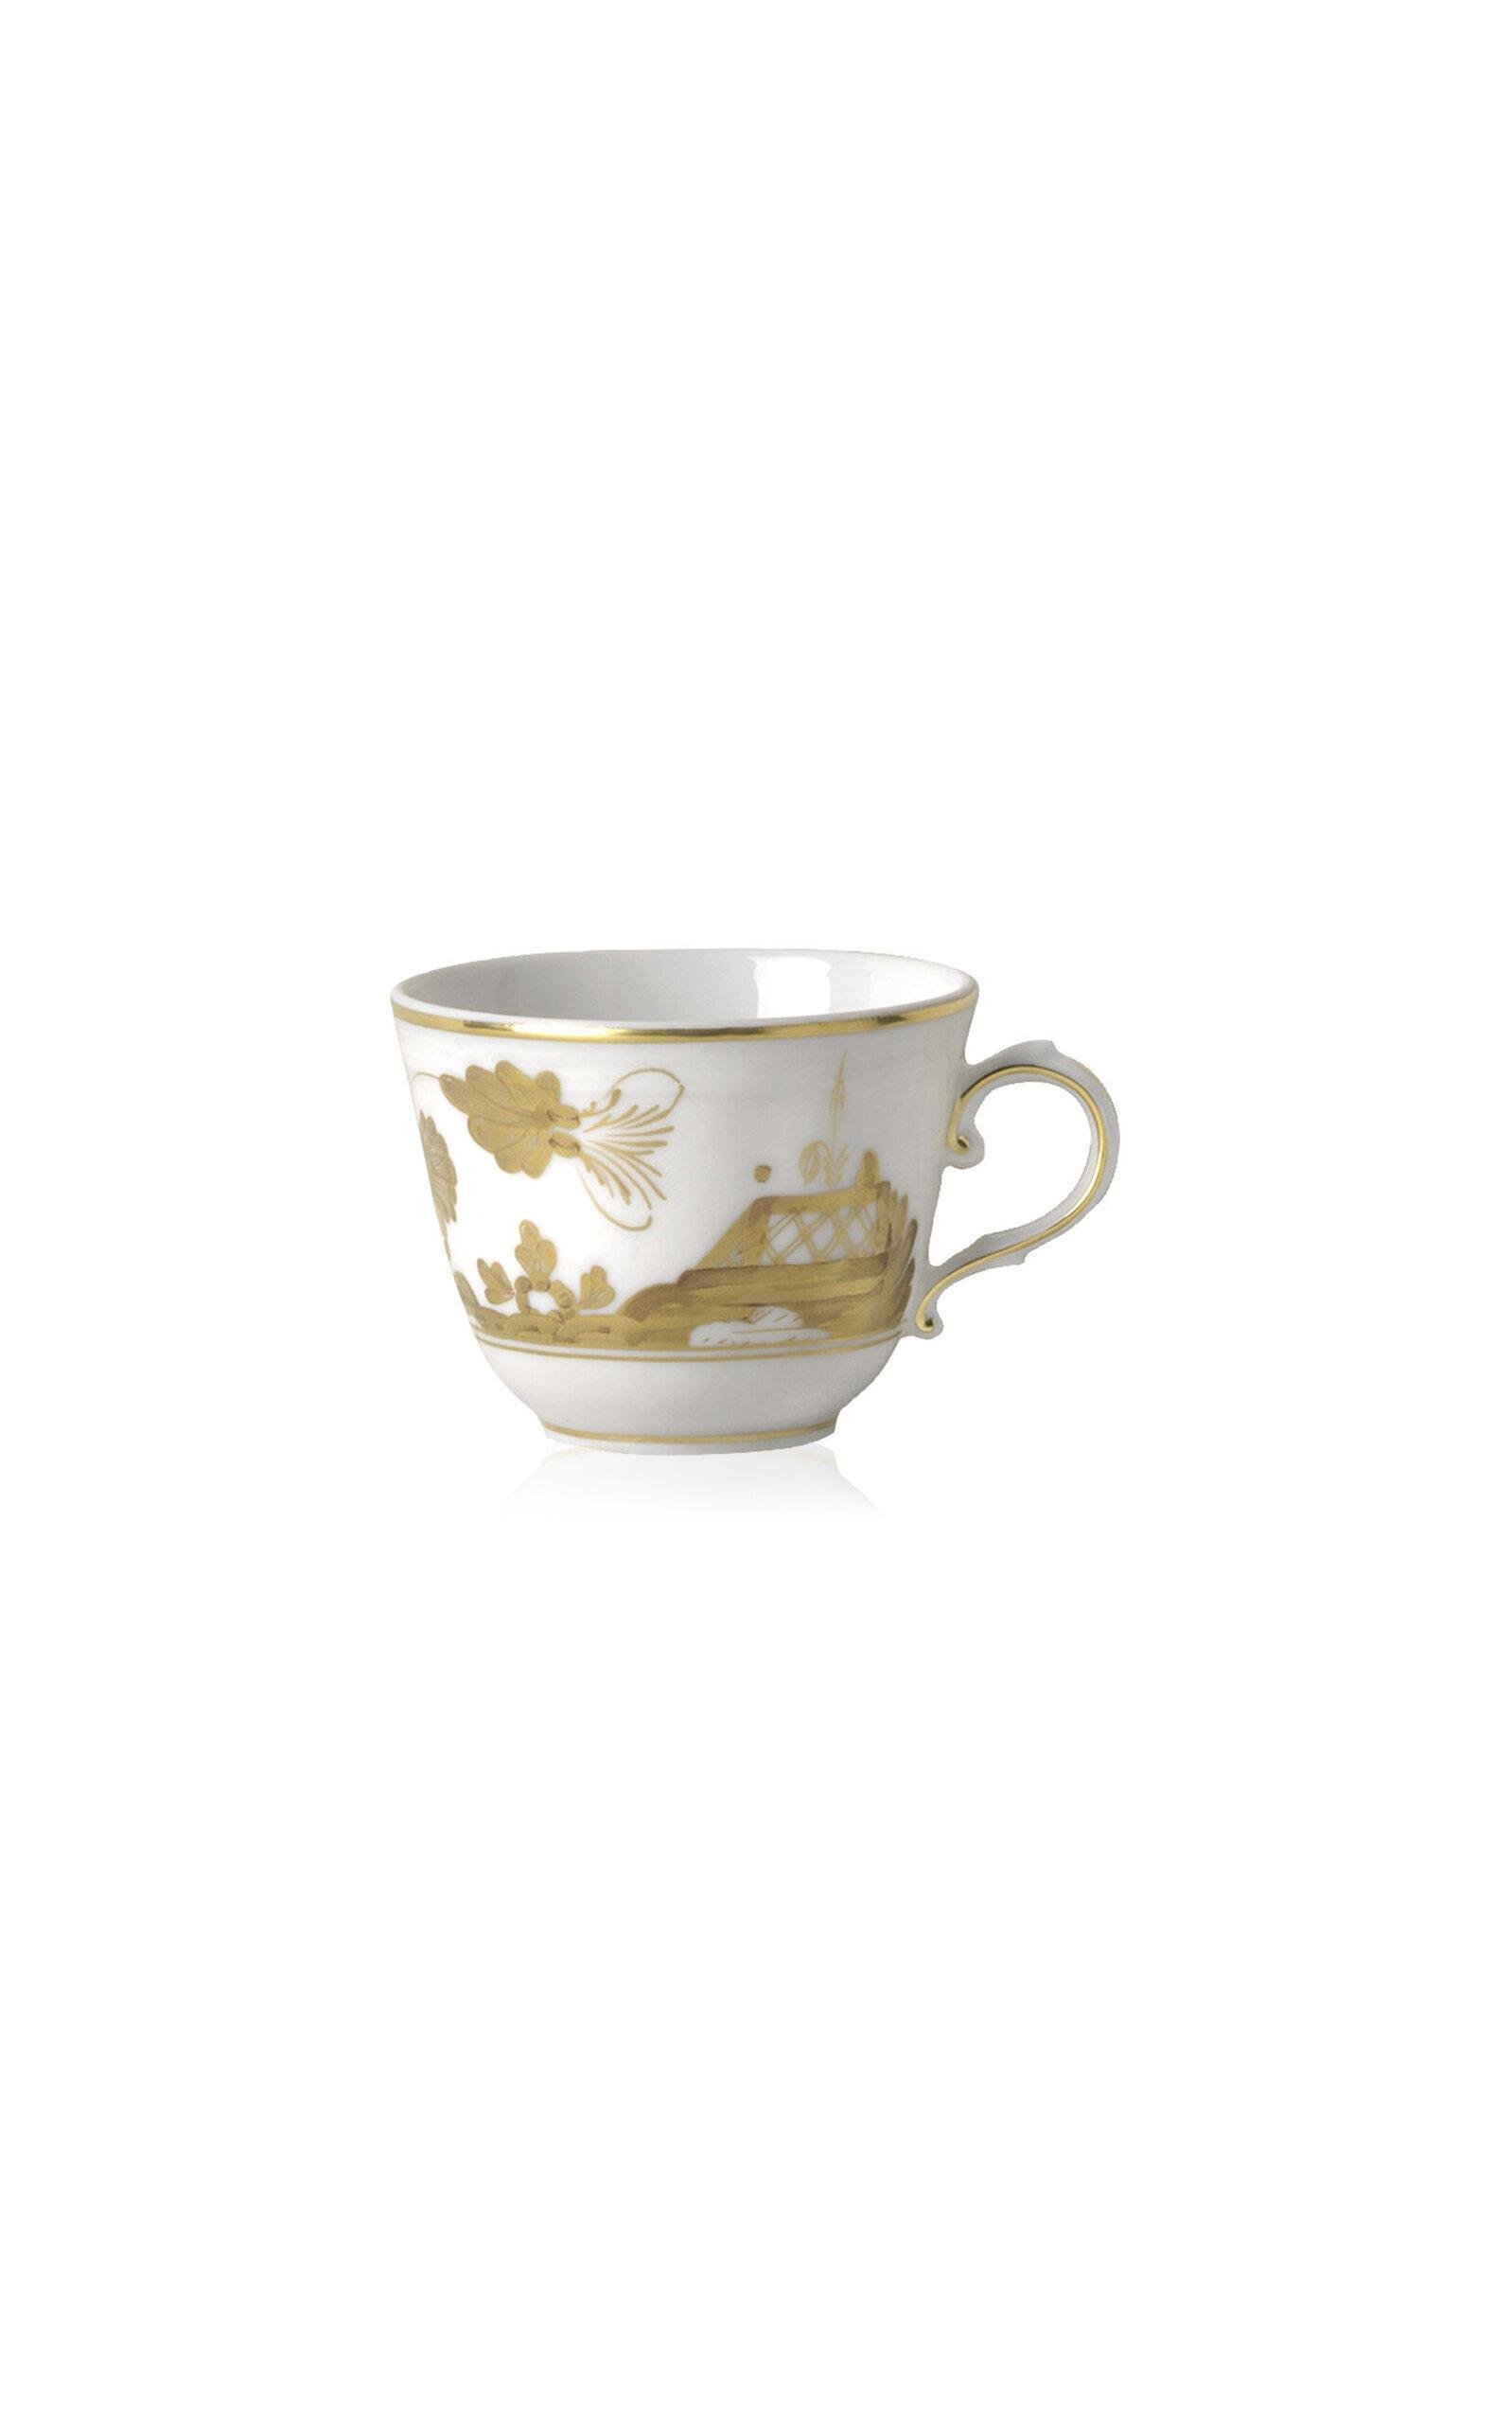 Ginori 1735 - Antico Doccia Porcelain Coffee Cup - White - Moda Operandi by GINORI 1735